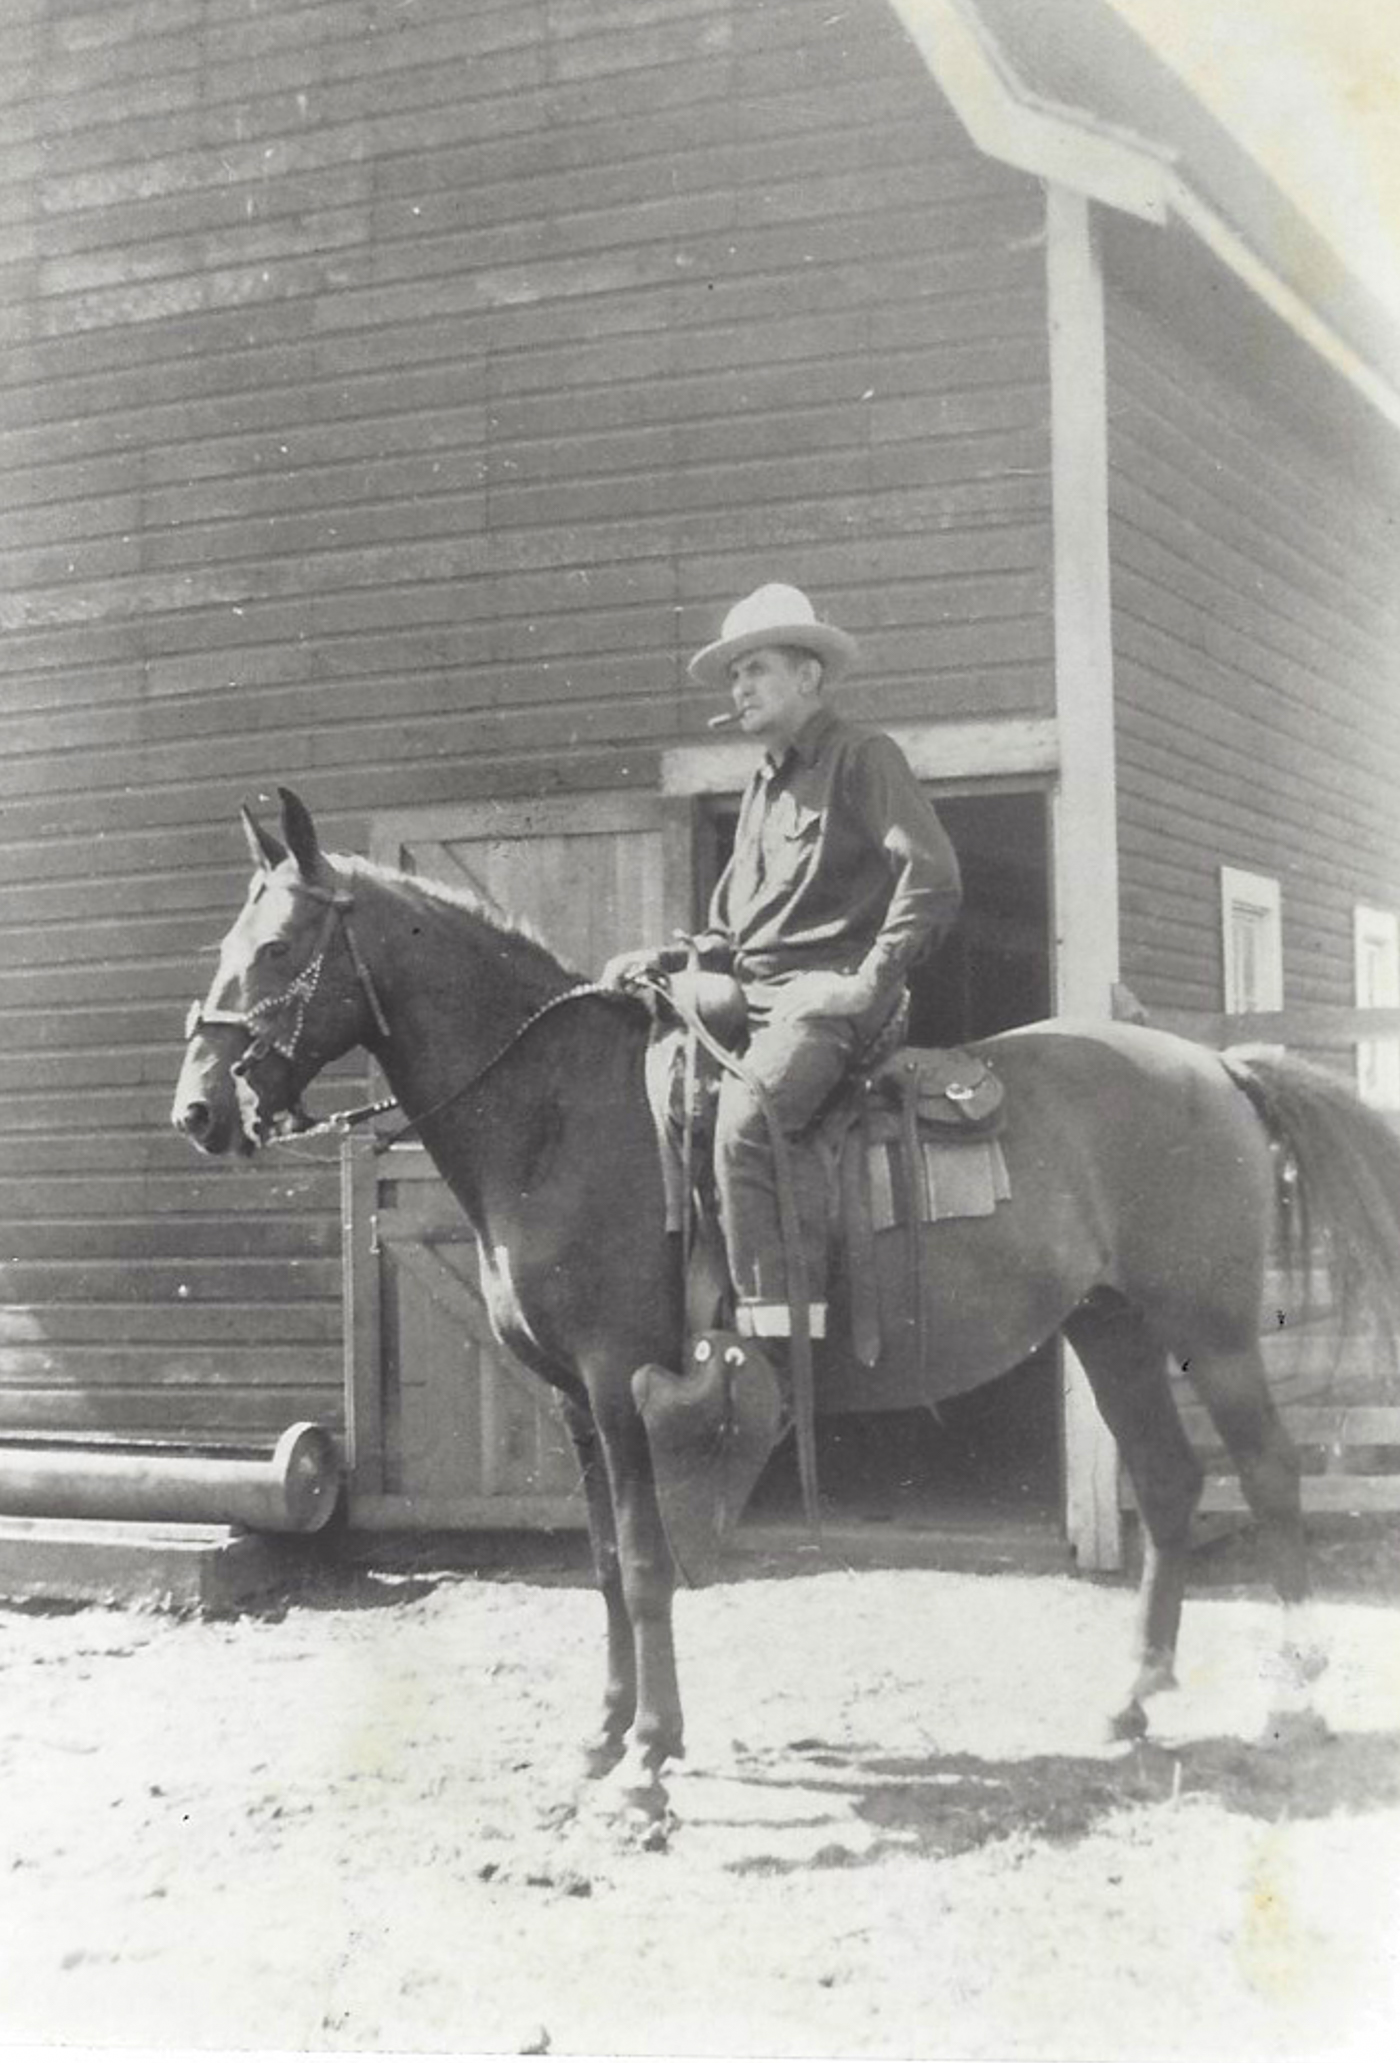 Horseback in front of barn.